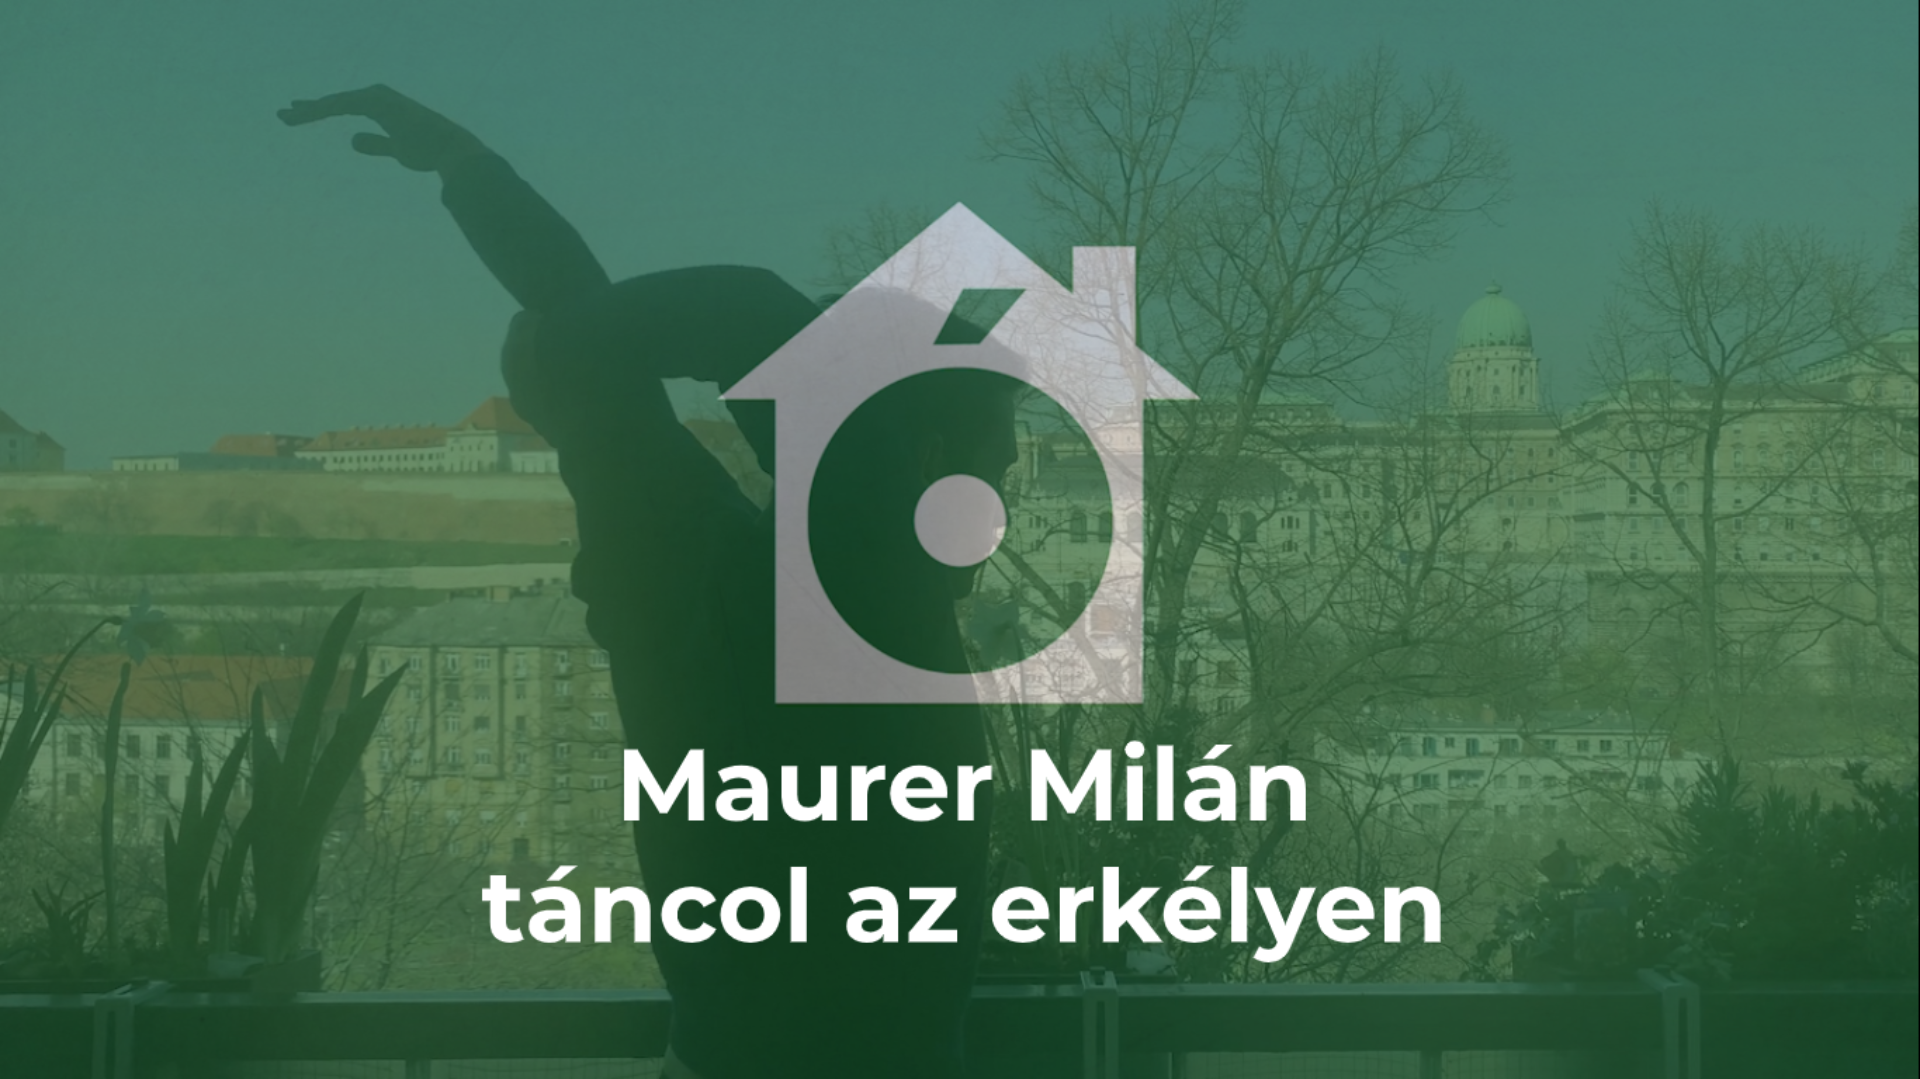 Maurer Milán a tavaszból nyer energiát #addigamíg / 5+1 kérdéses #maradjotthon-interjú